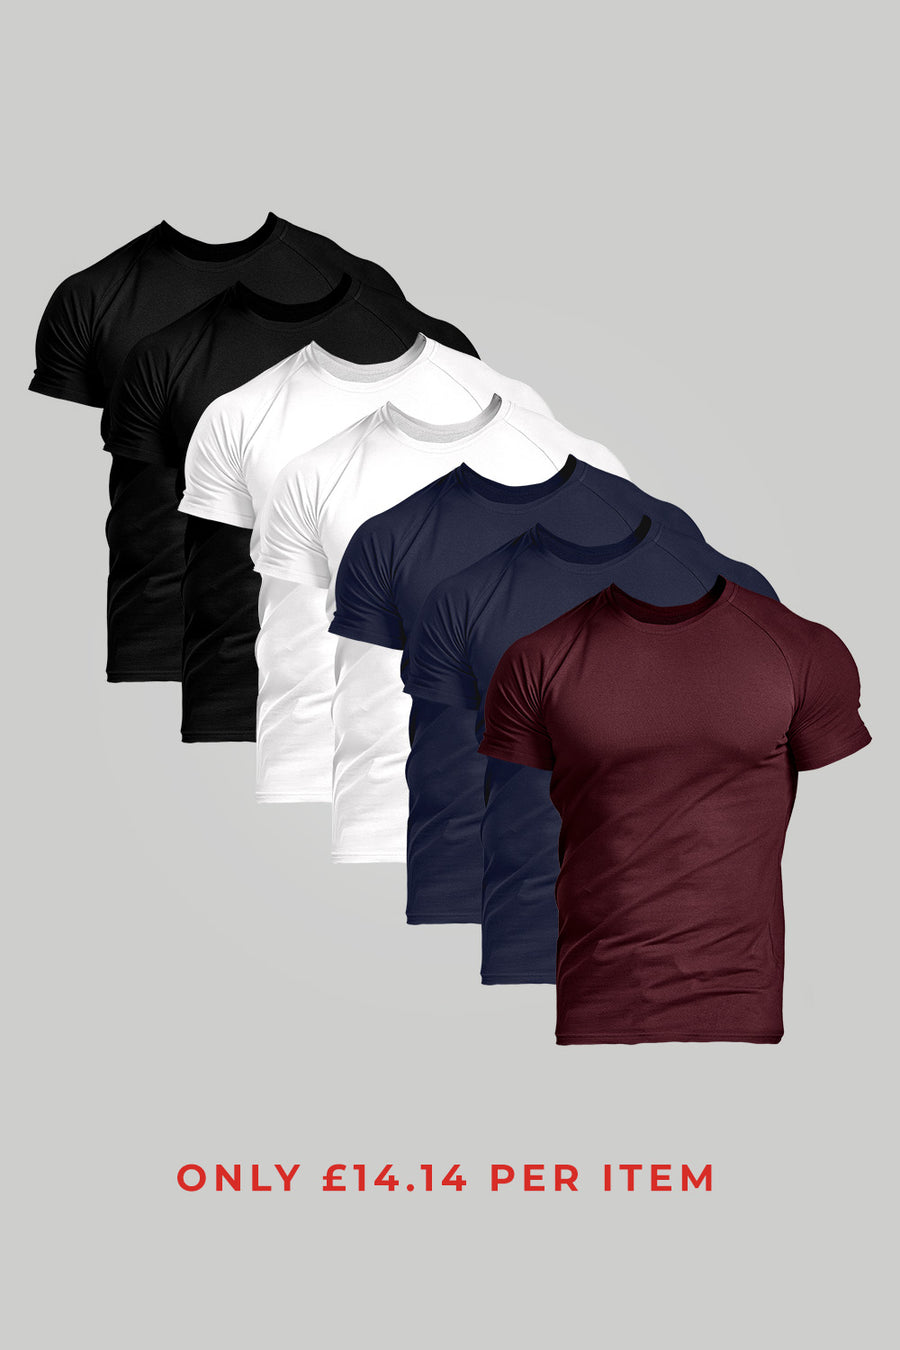 T-Shirt Bundles - TAILORED ATHLETE - ROW